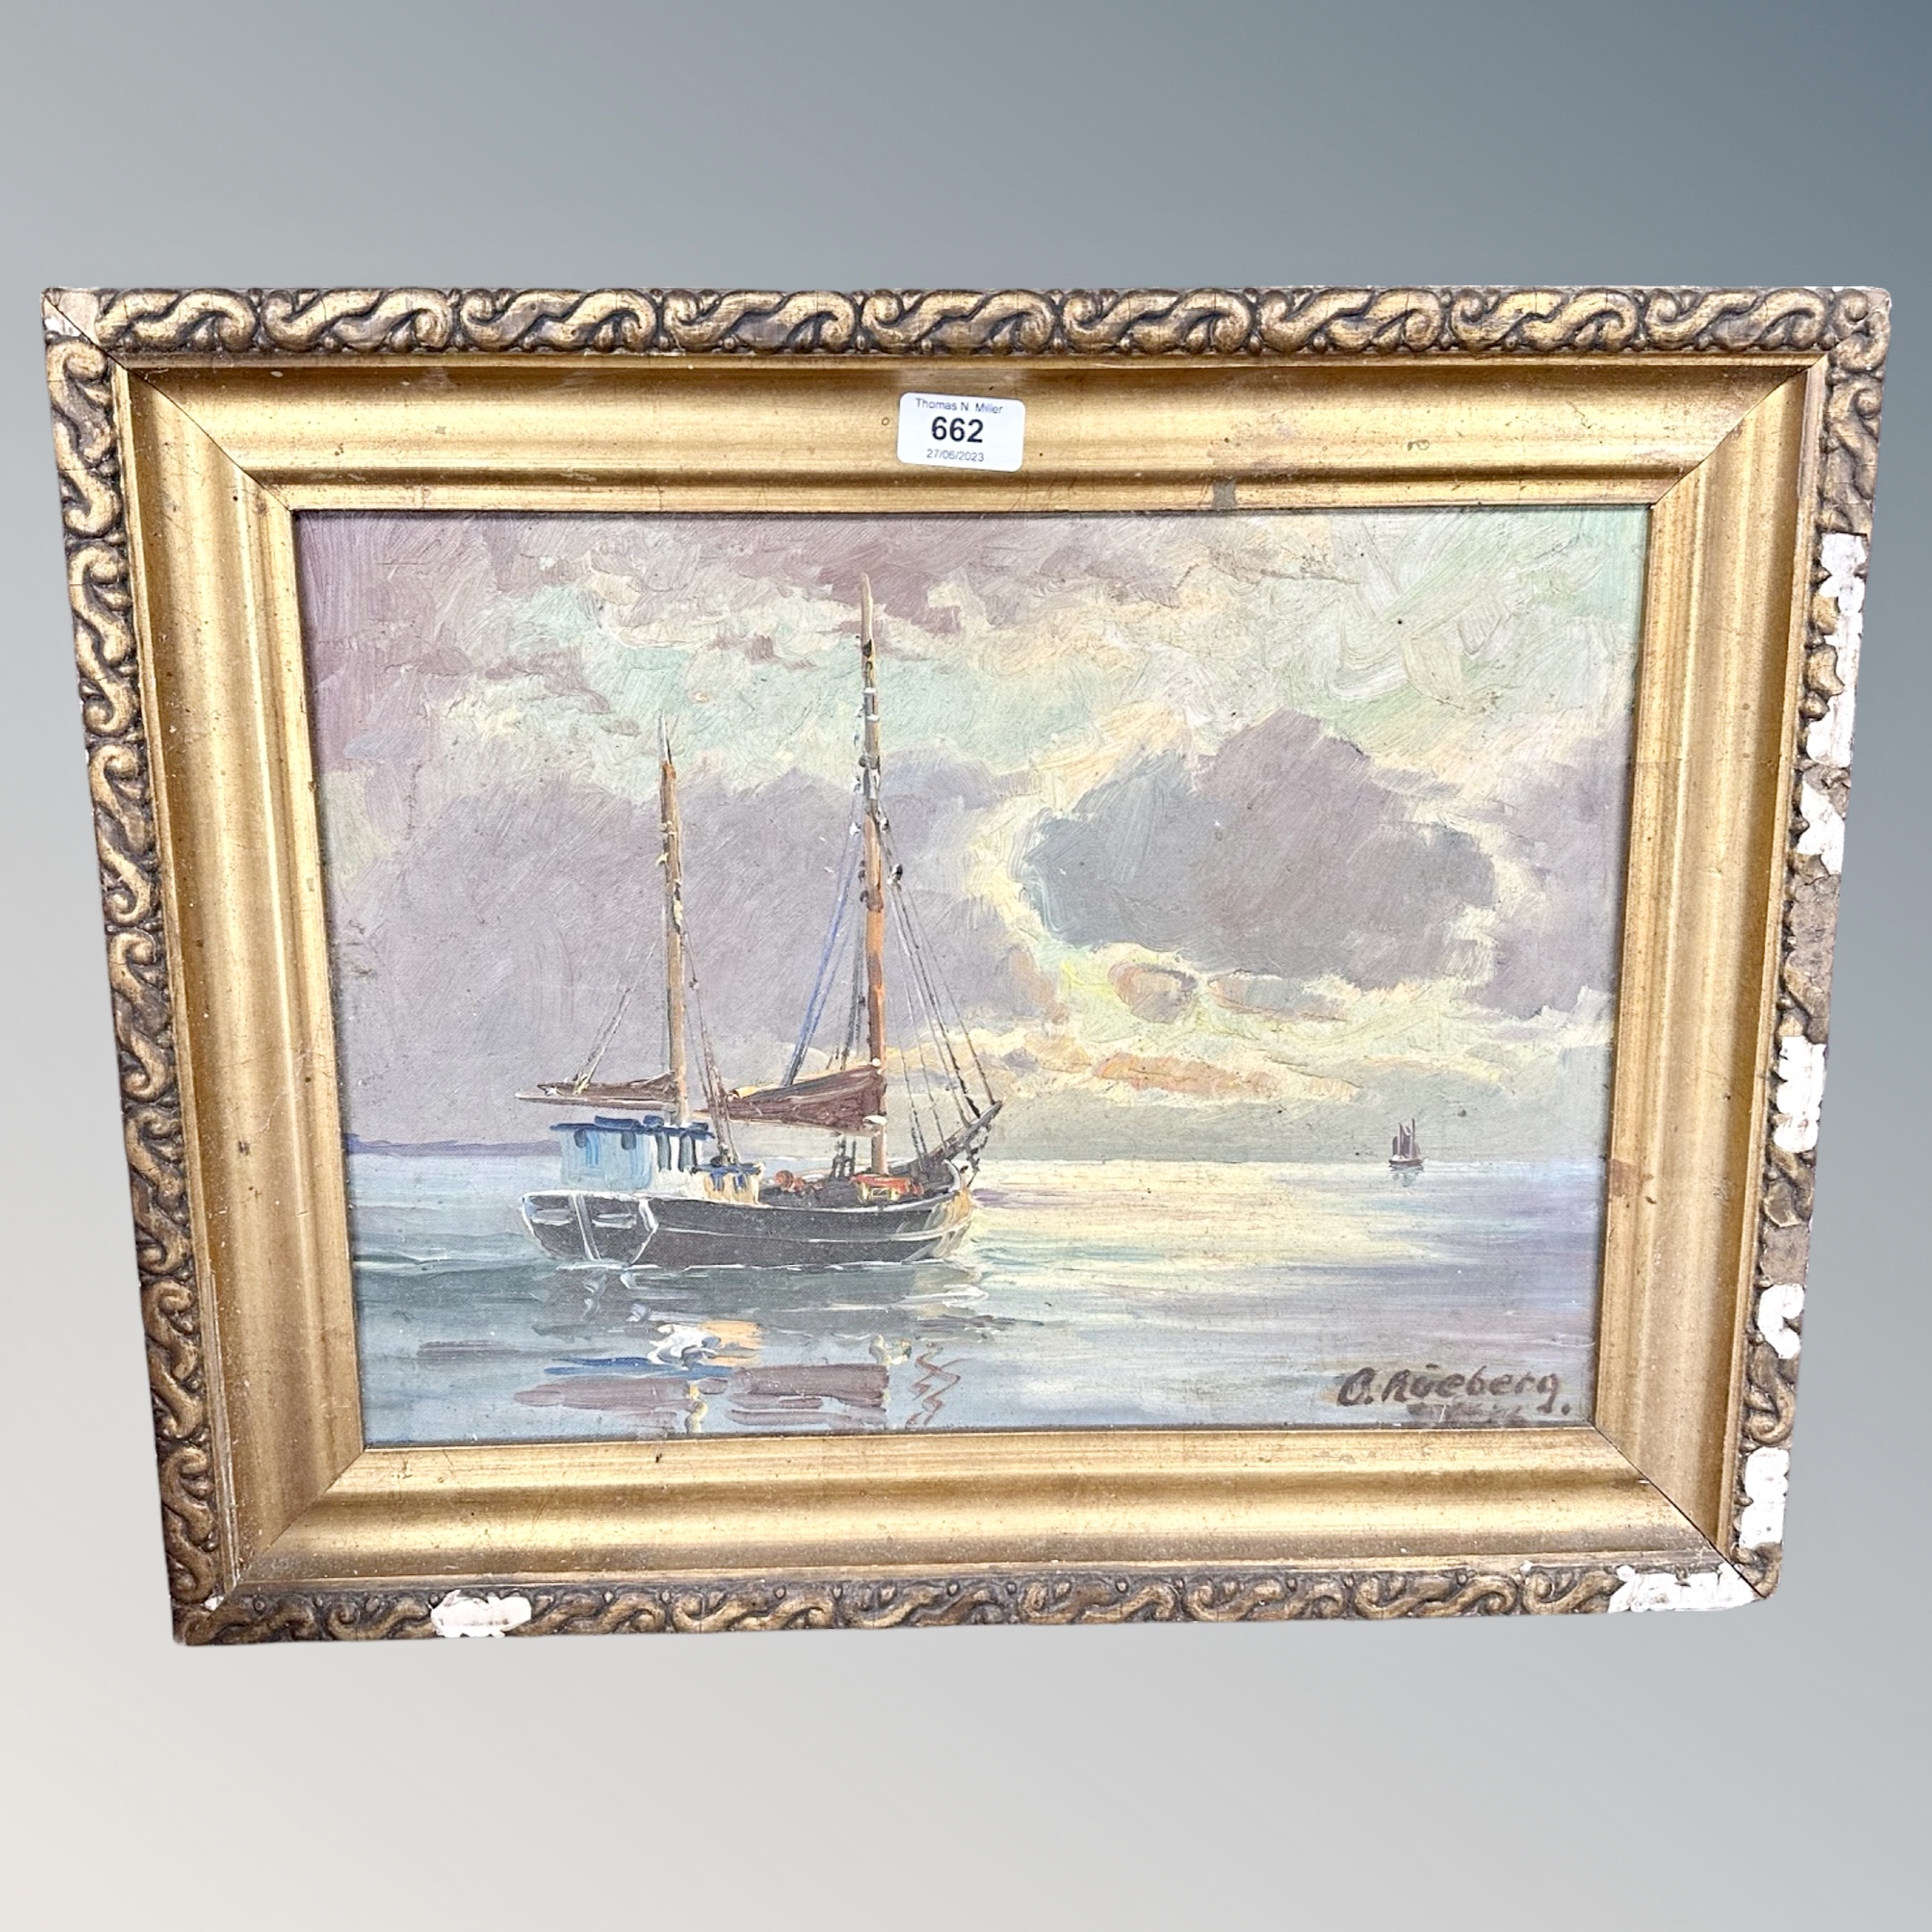 C Rueberg : Fishing boat at sea, oil on canvas,